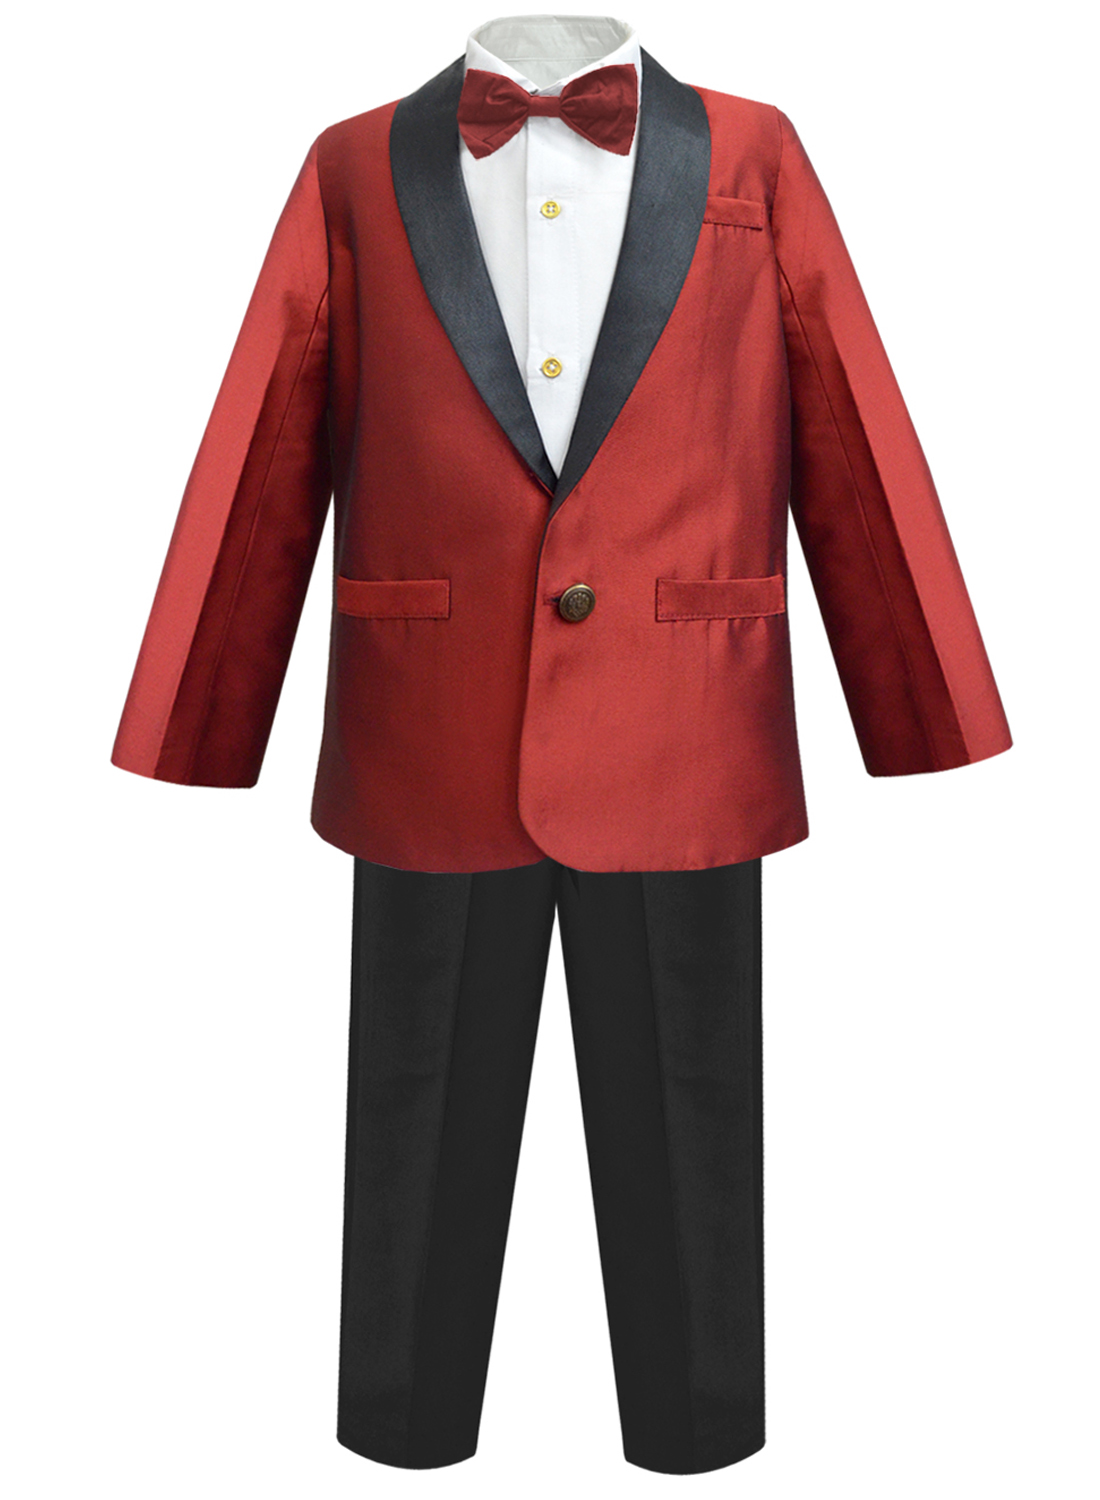 Toddler Suits for Boys Tuxedo Suit Boys' Ring Bearer Suits Black Kids  Wedding Outfit Boys Dress Clothes Dress Up Size 12 - Walmart.com